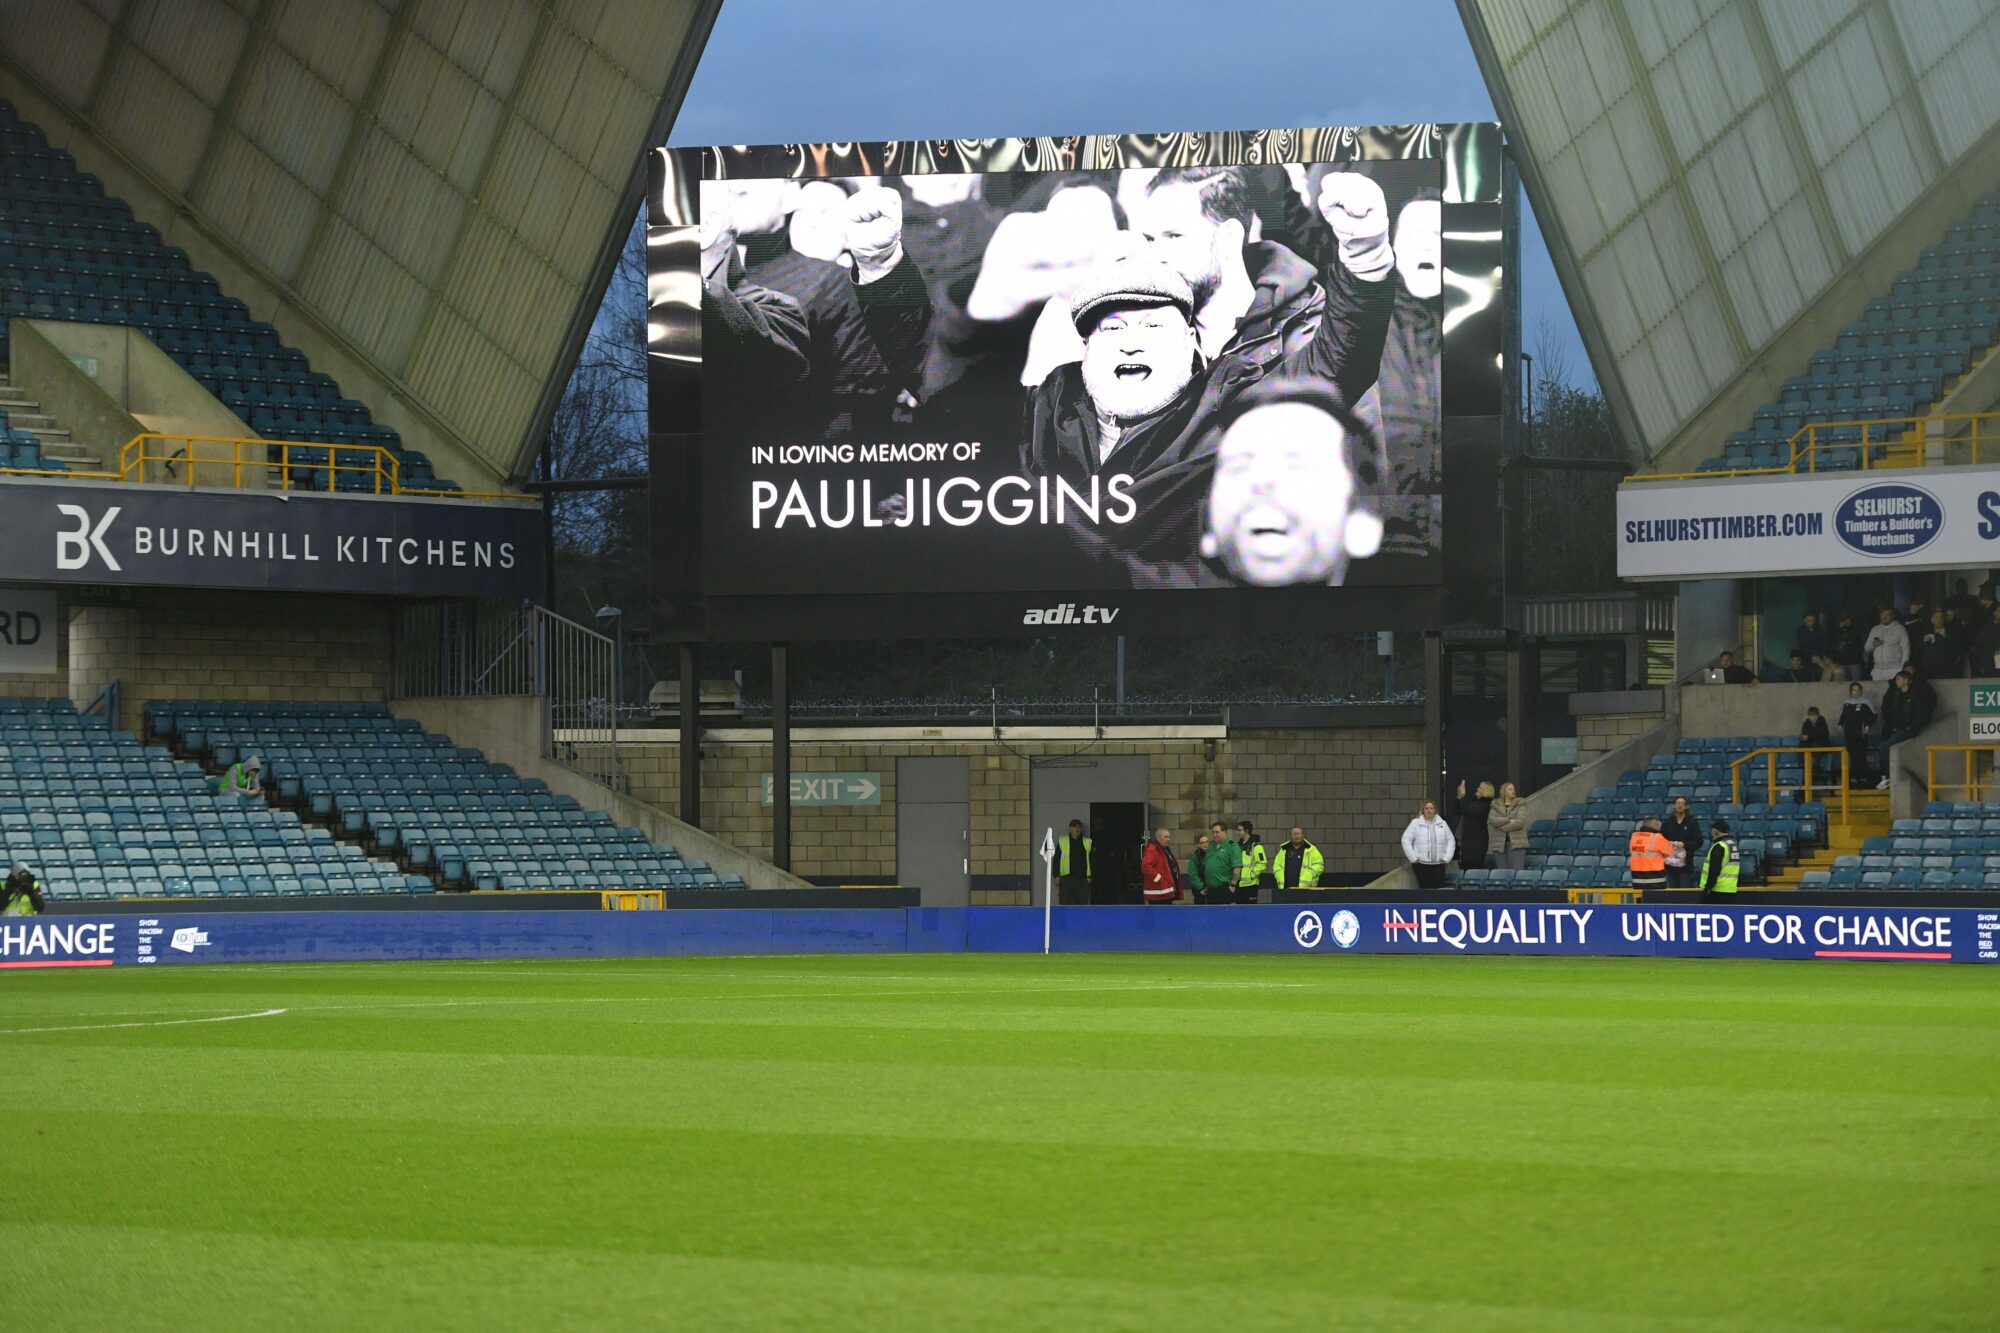 Millwall boss Gary Rowett on ‘lovely tribute’ to Paul Jiggins – South London News